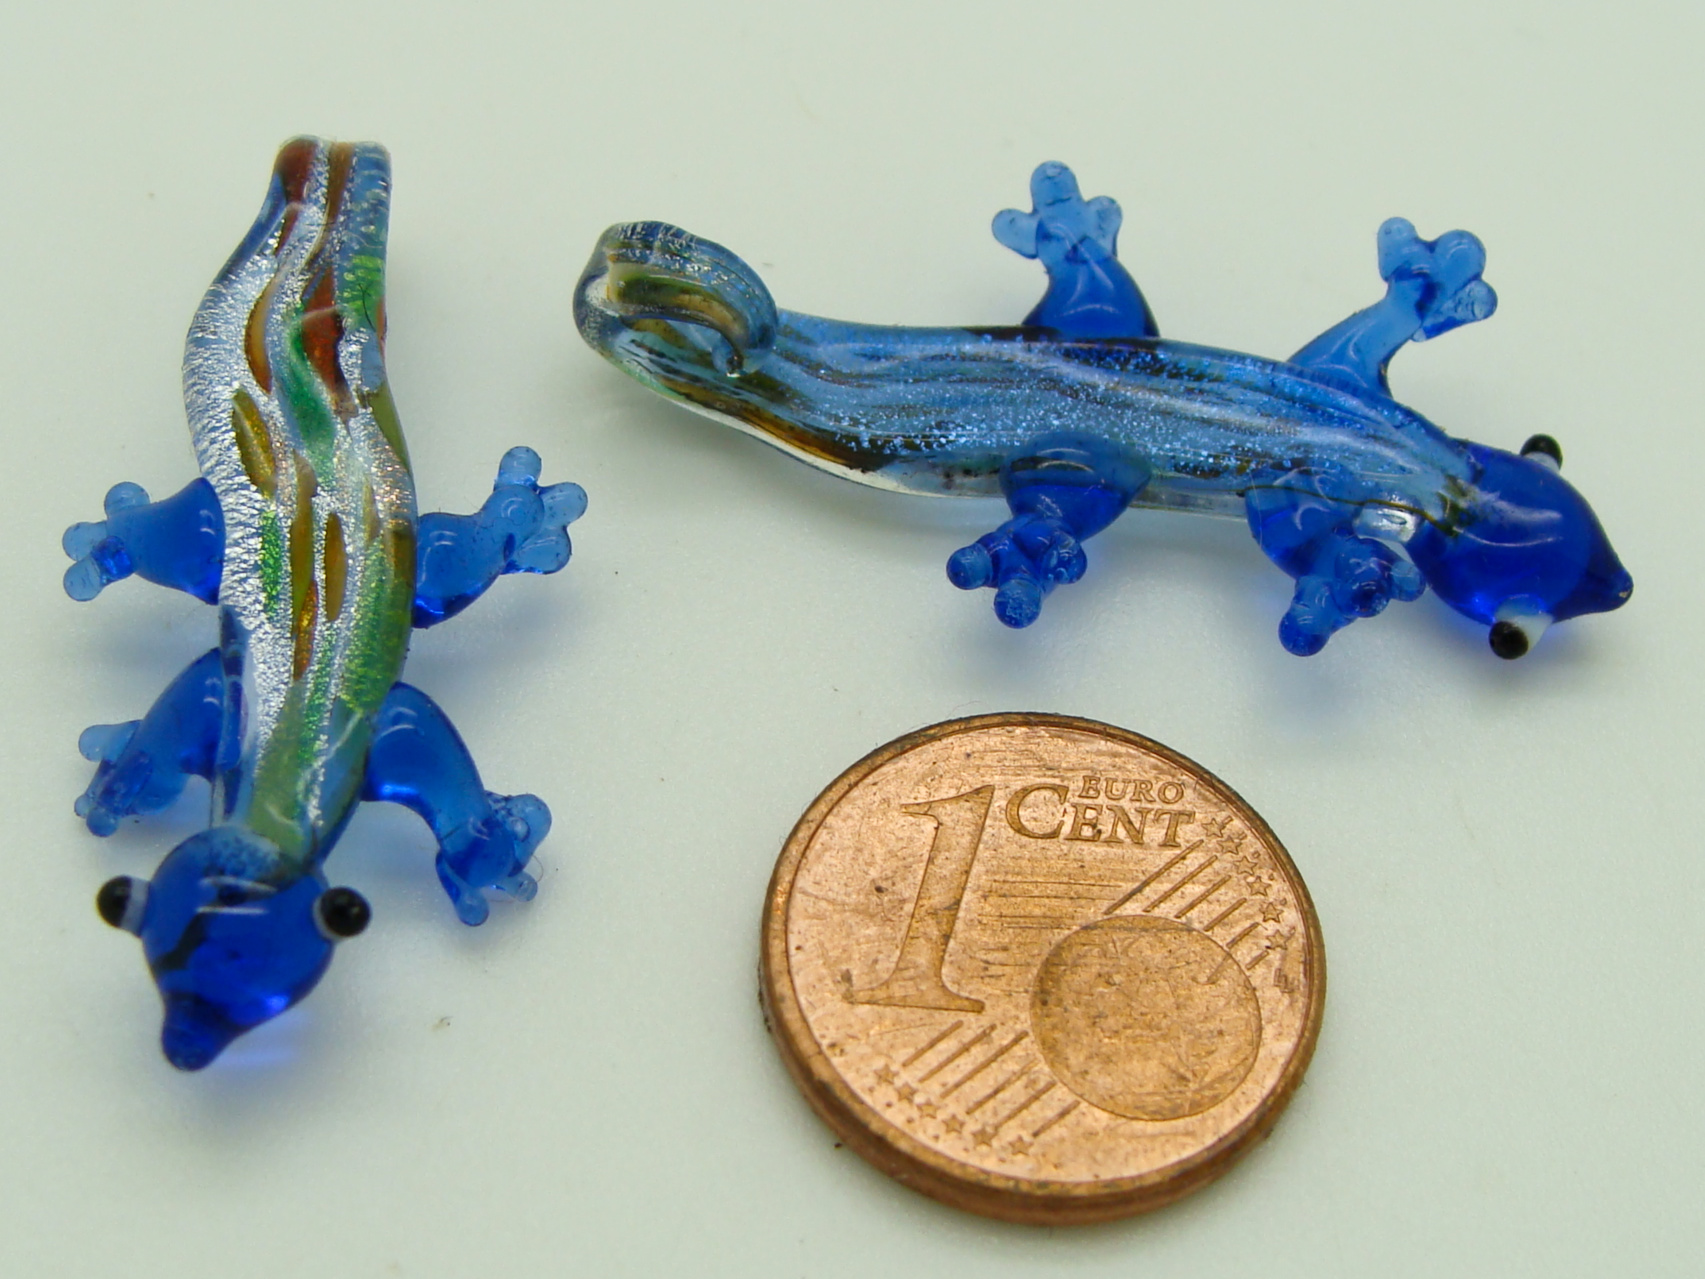 Pend-390-2 pendentif lezard mini bleu fonce verre